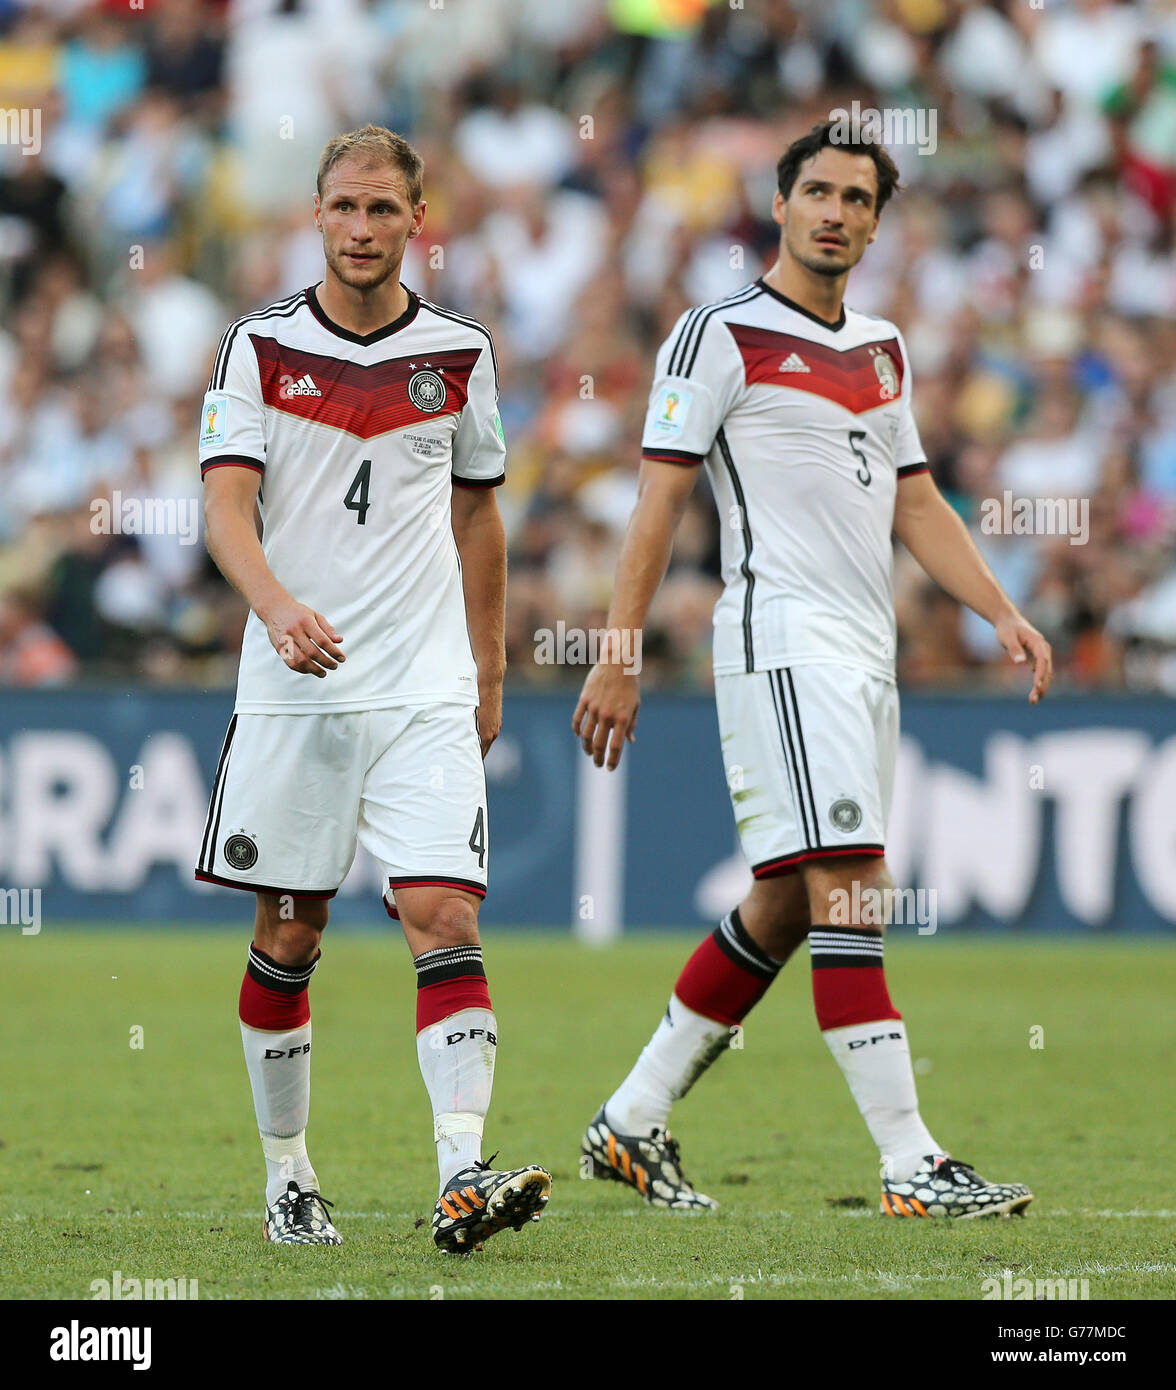 Calcio - Coppa del mondo FIFA 2014 - finale - Germania contro Argentina - Estadio do Maracana. Tedesco Benedikt Howedes e Mats Hummels (a destra) Foto Stock